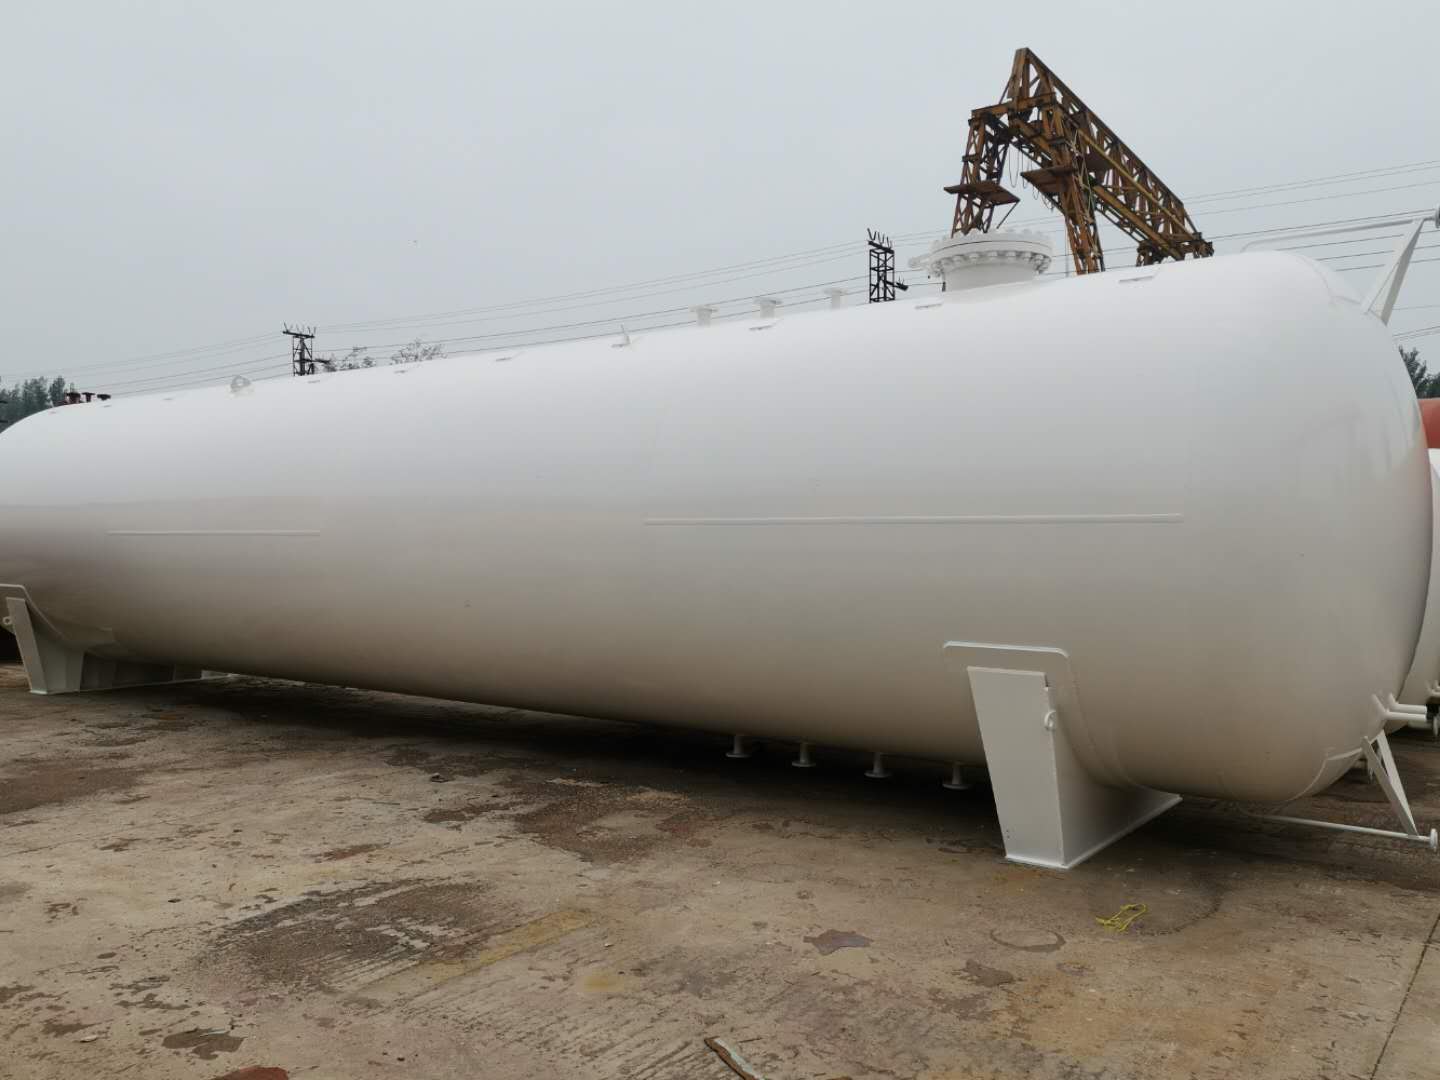 Liquefied petroleum gas storage tank is a common equipment for containing liquefied petroleum gas